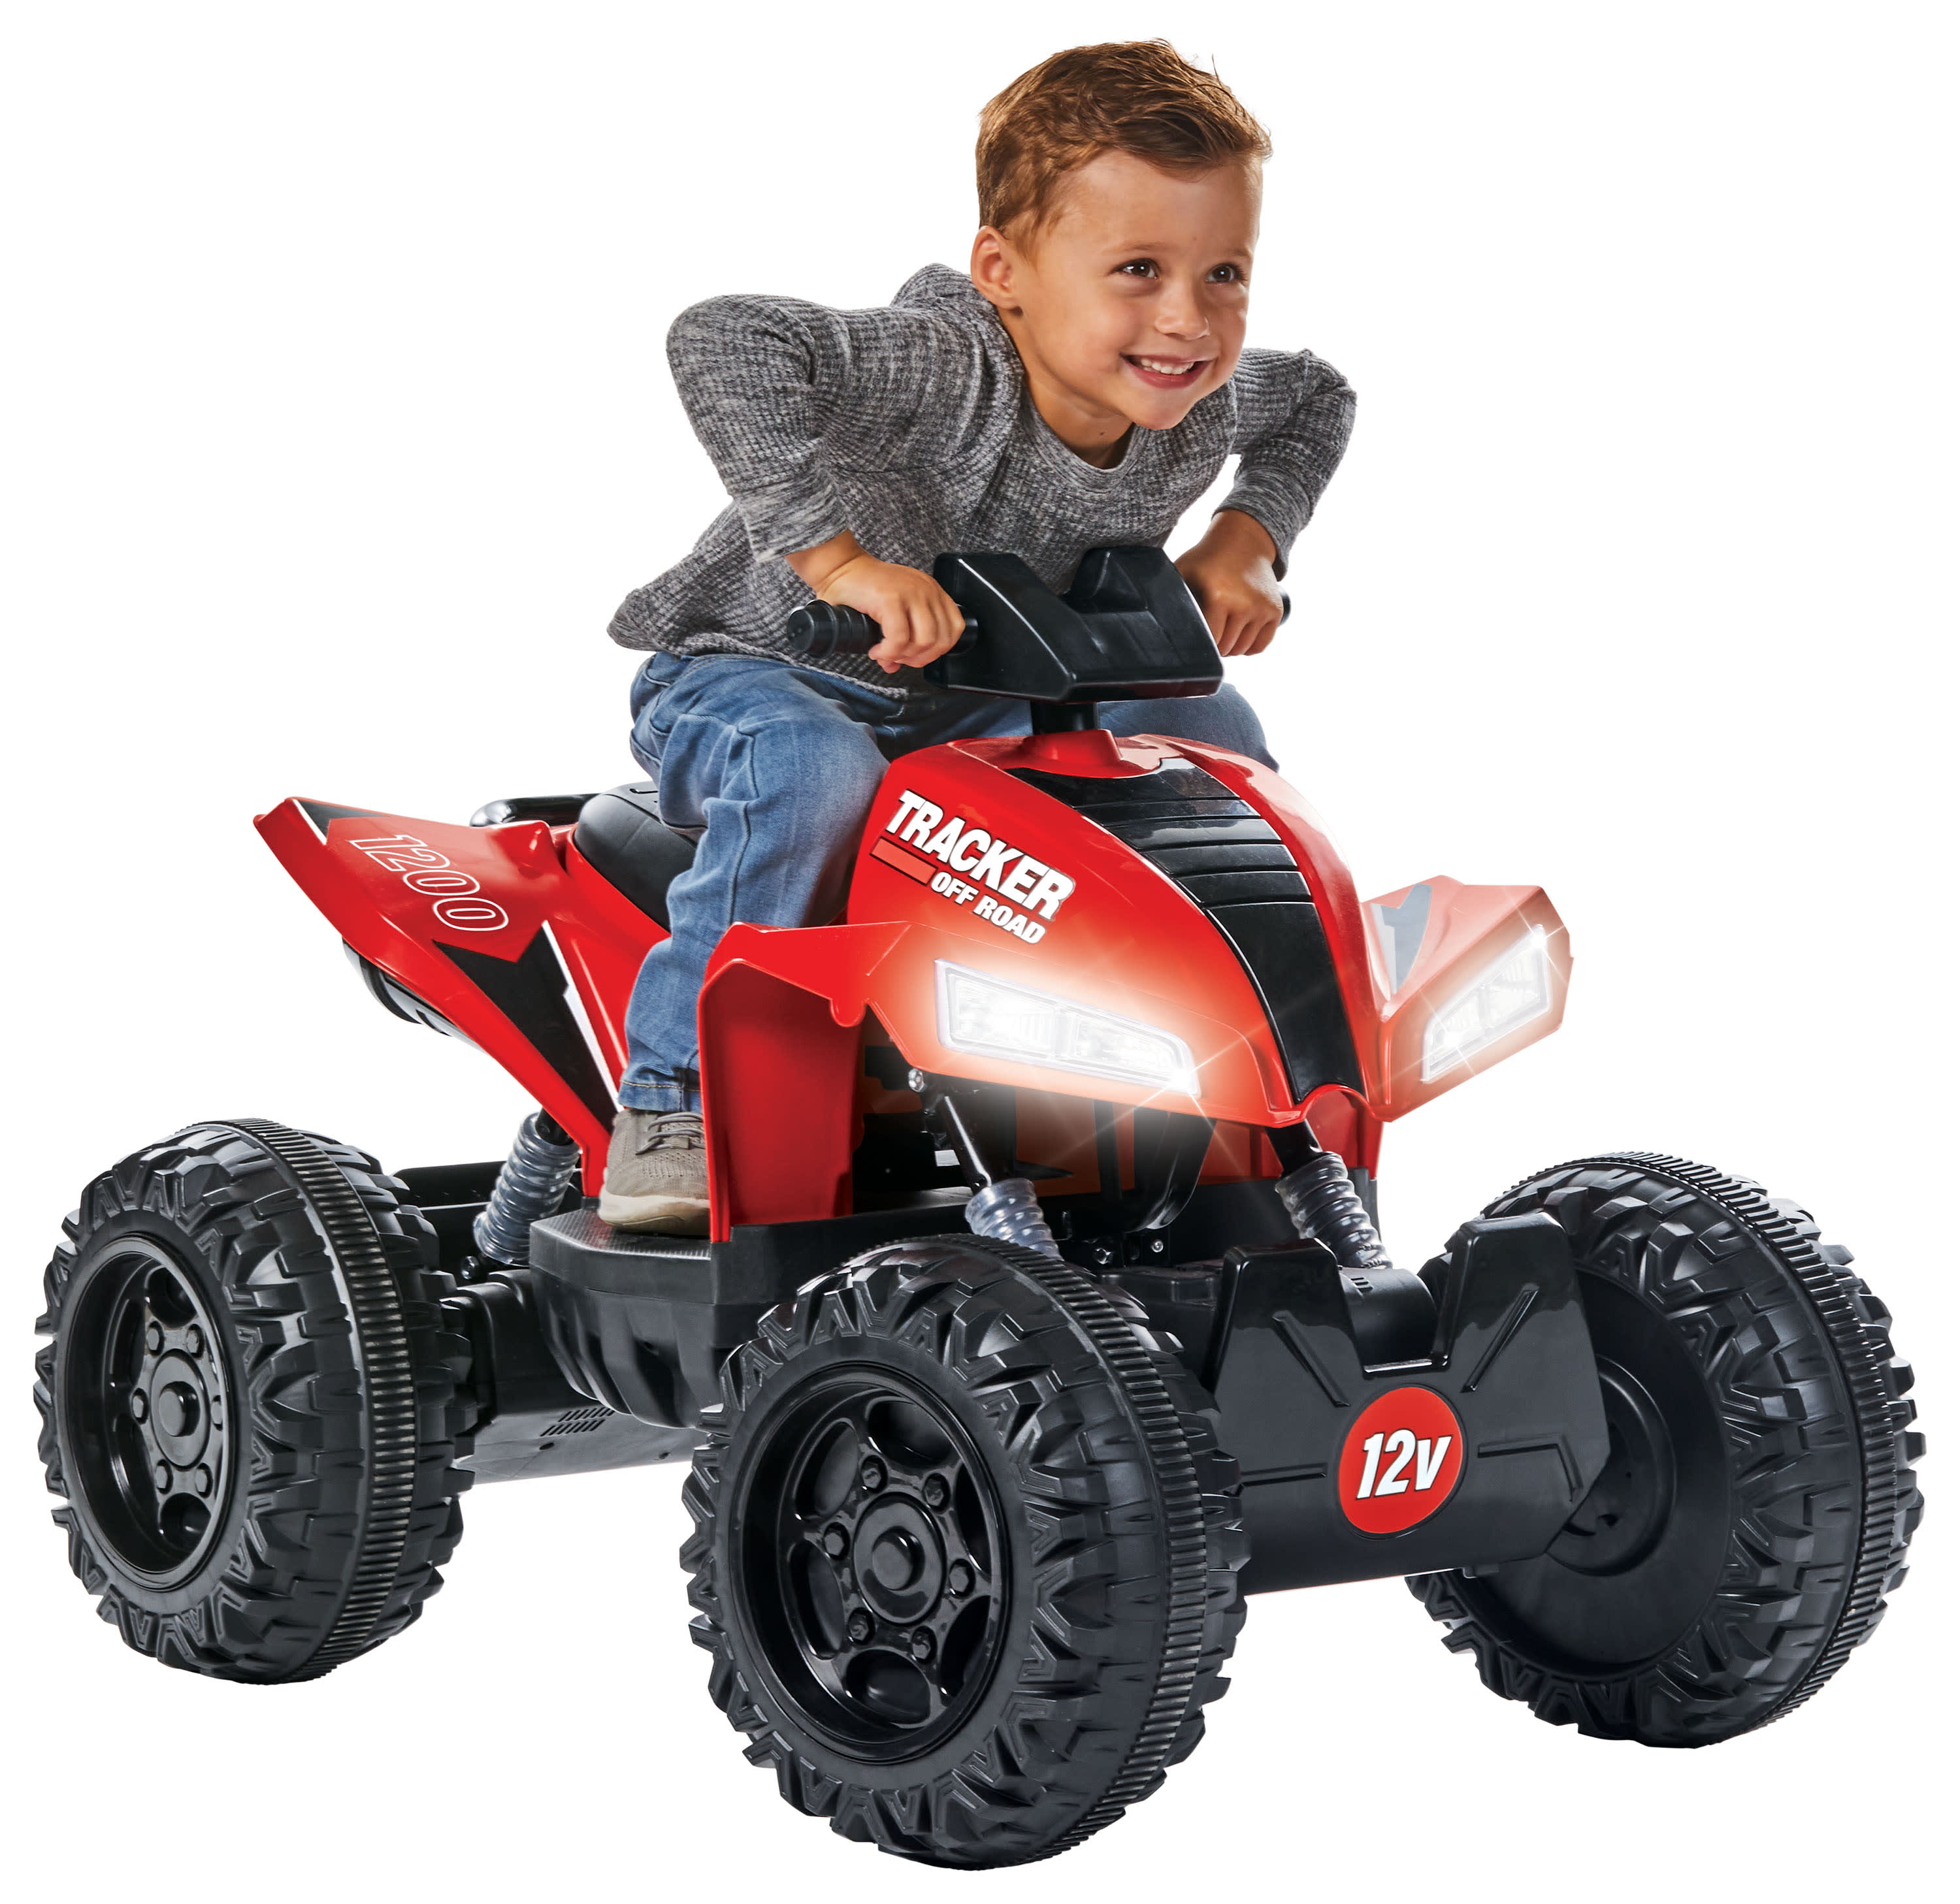 Bass Pro Shops® 12V Tracker® ATV Battery Ride-On Toy for Kids - Red